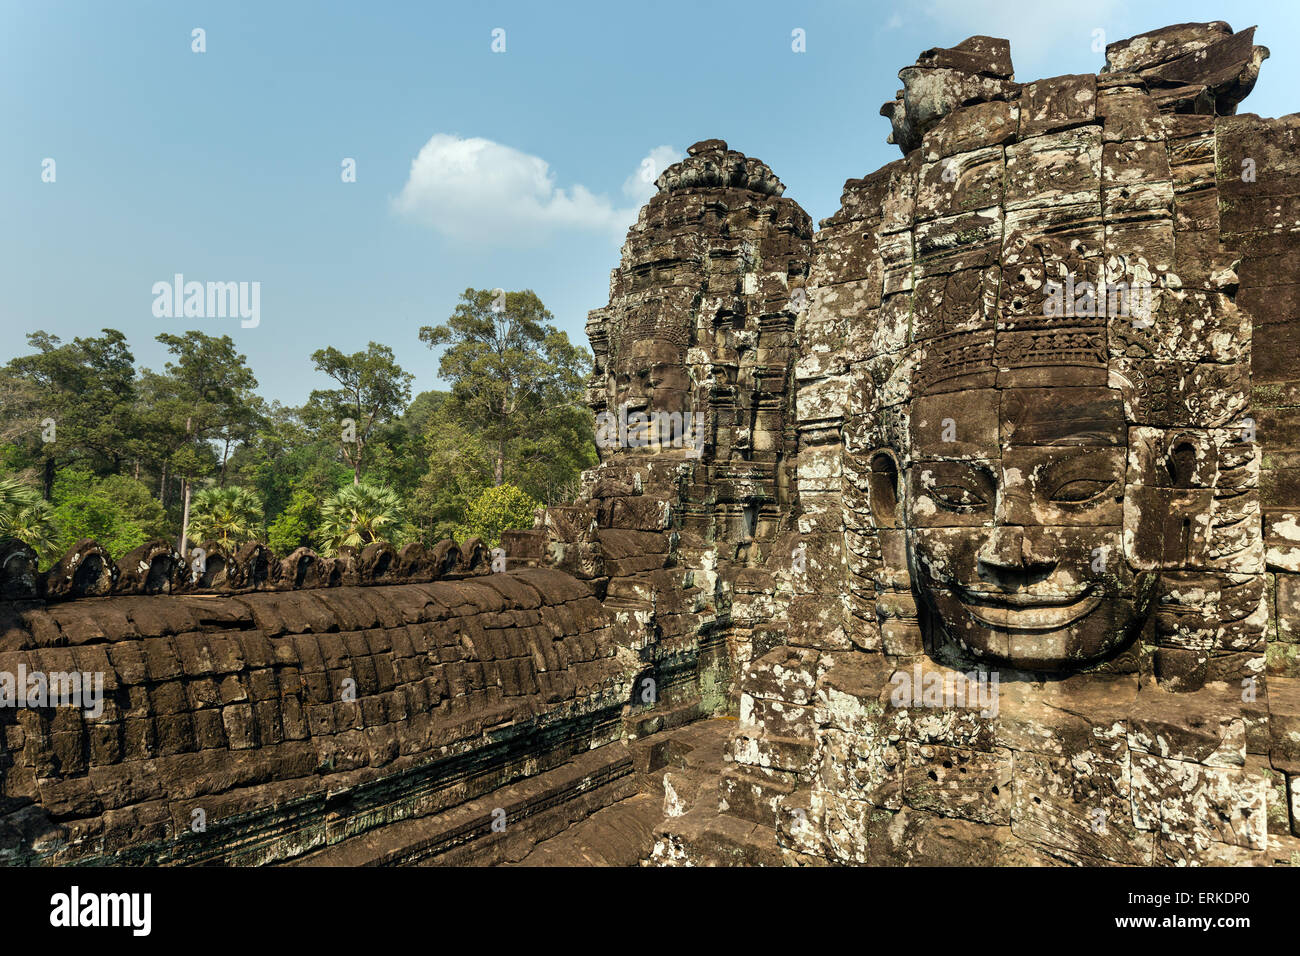 Faces of Bodhisattva Lokeshvara, Bayon Temple, Angkor Thom, Siem Reap, Cambodia Stock Photo